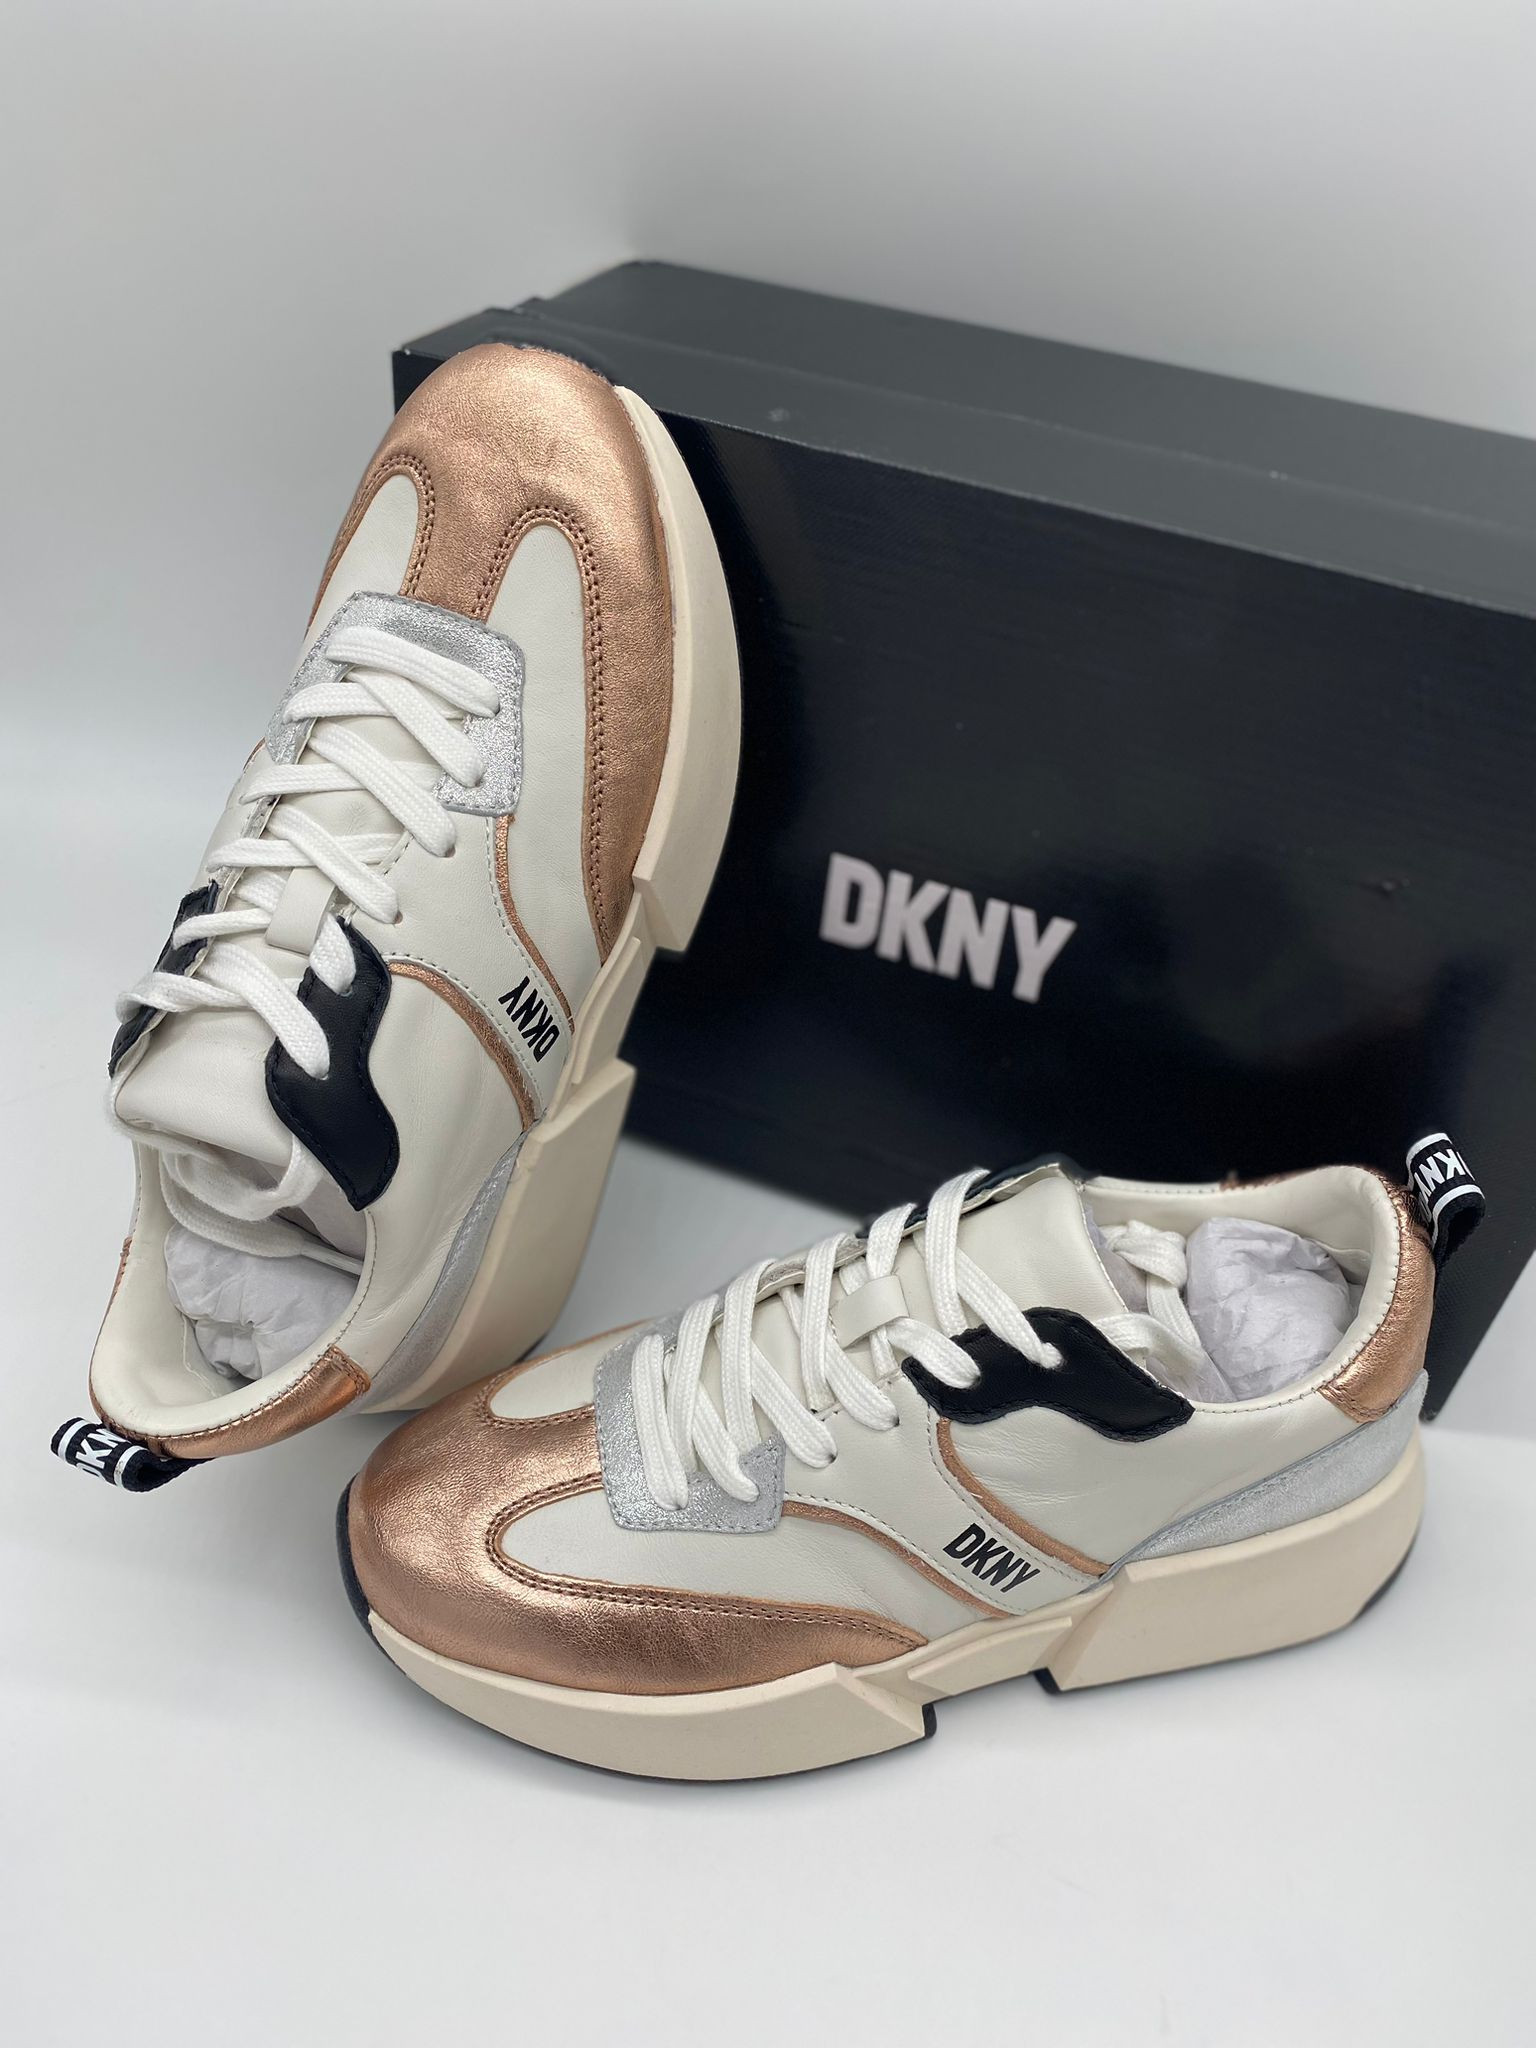 DKNY Retro Sneaker - Wht/Blk/Sil - US 7/ EUR 37.5 / UK4.5